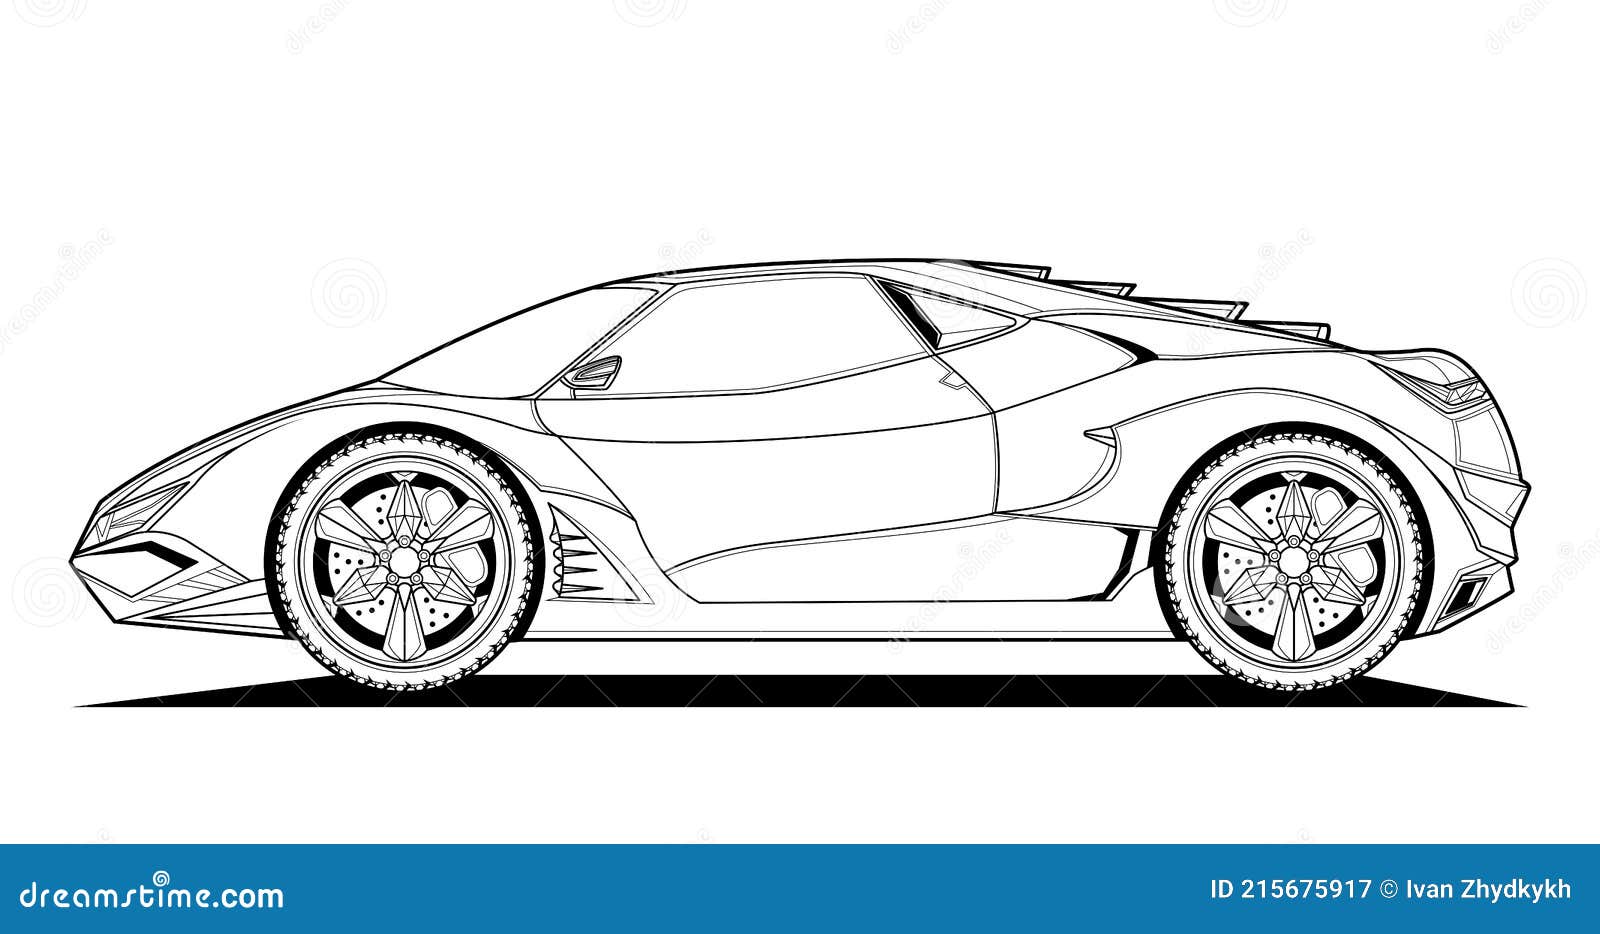 Cool Car Drawing Images  Drawing Skill